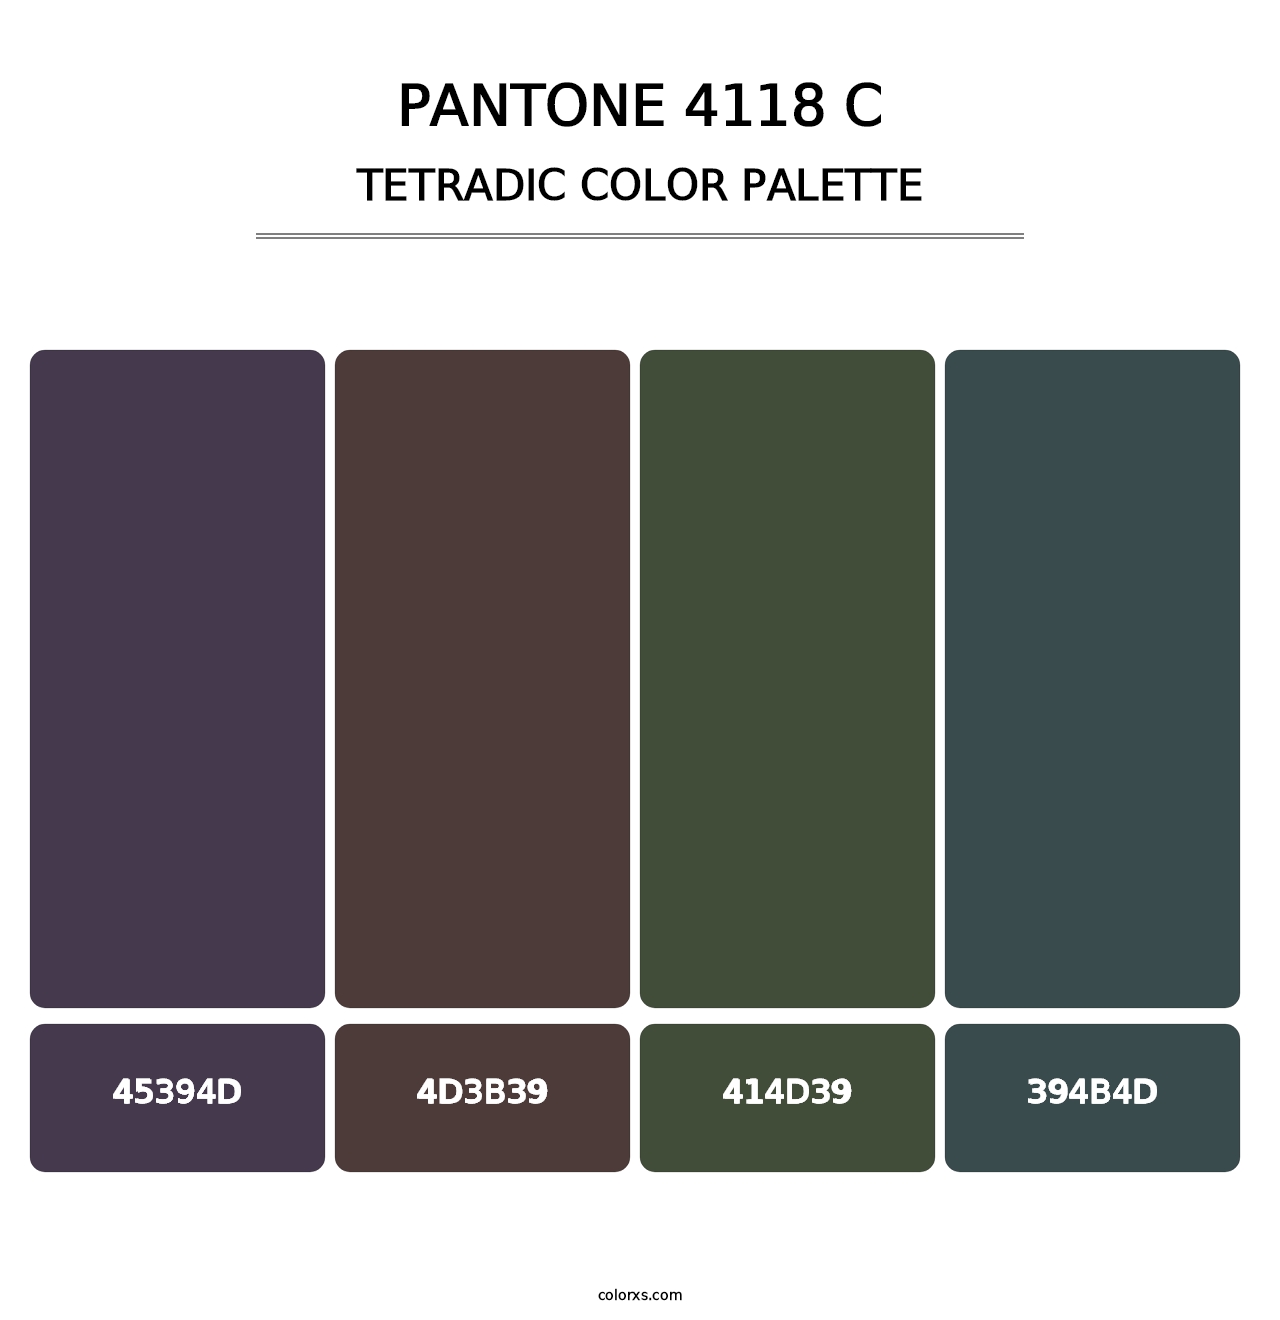 PANTONE 4118 C - Tetradic Color Palette